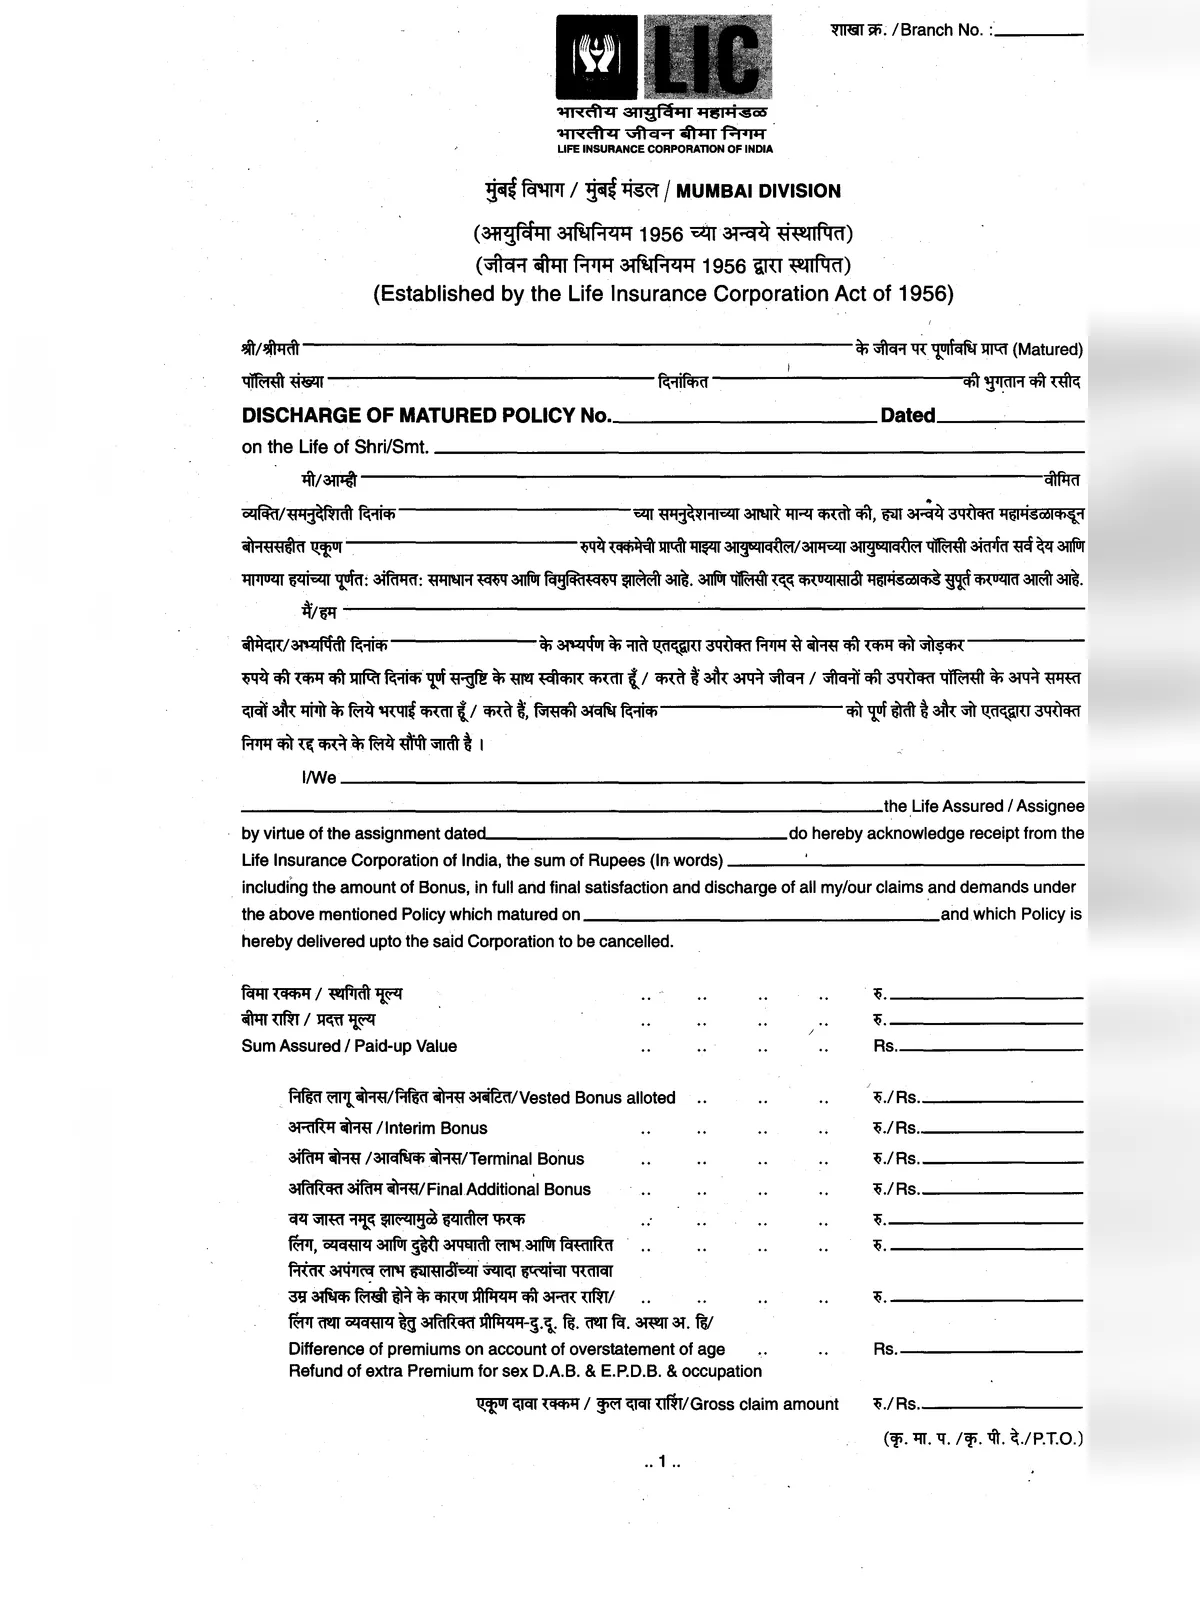 LIC Maturity Form 3825